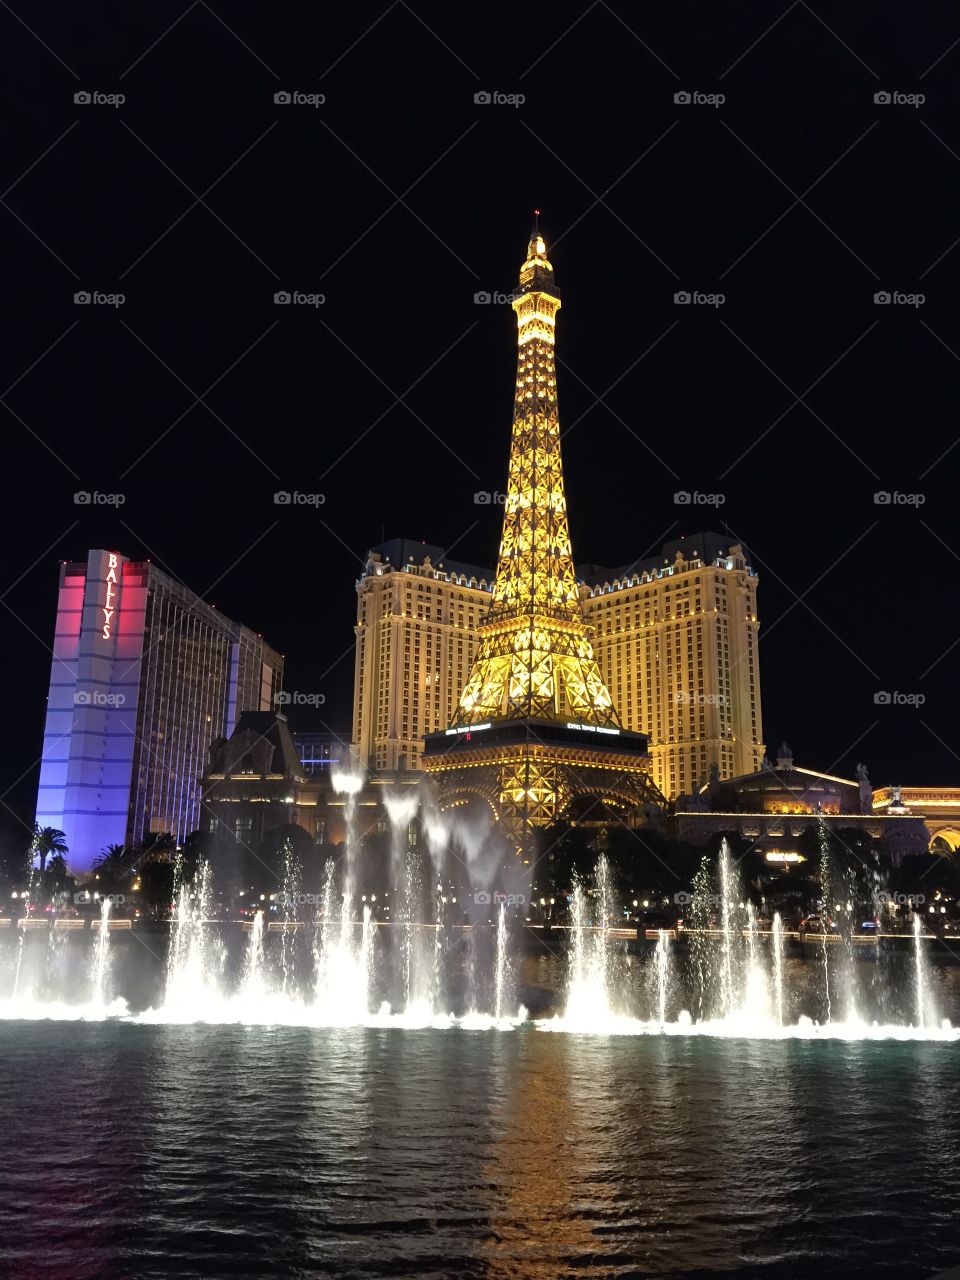 Las Vegas - Paris